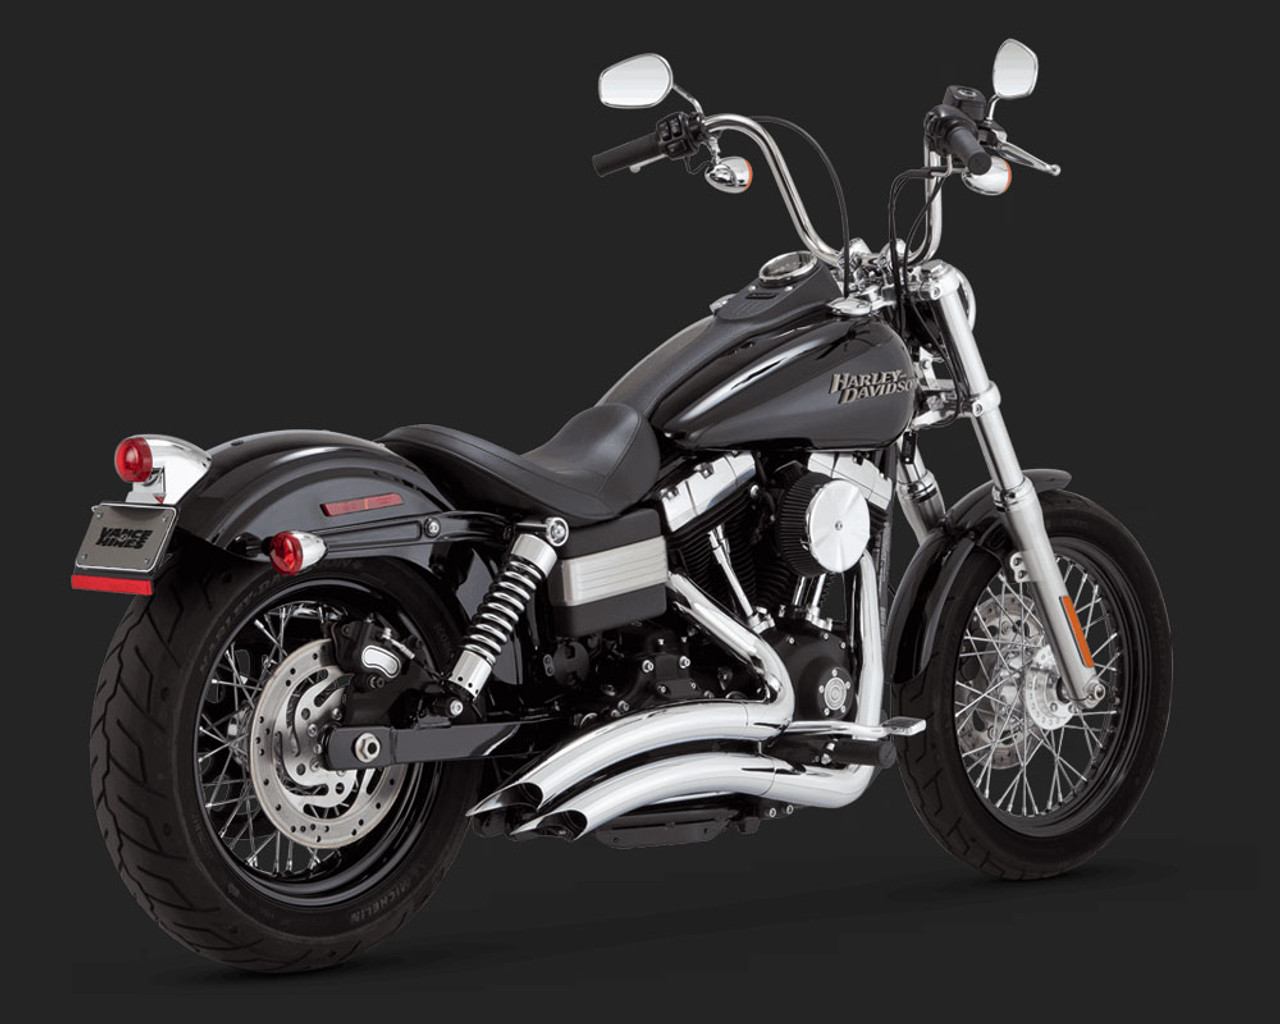 File:Harley1808-f030-Brutus(detail)-vs-giants.jpg - Wikipedia